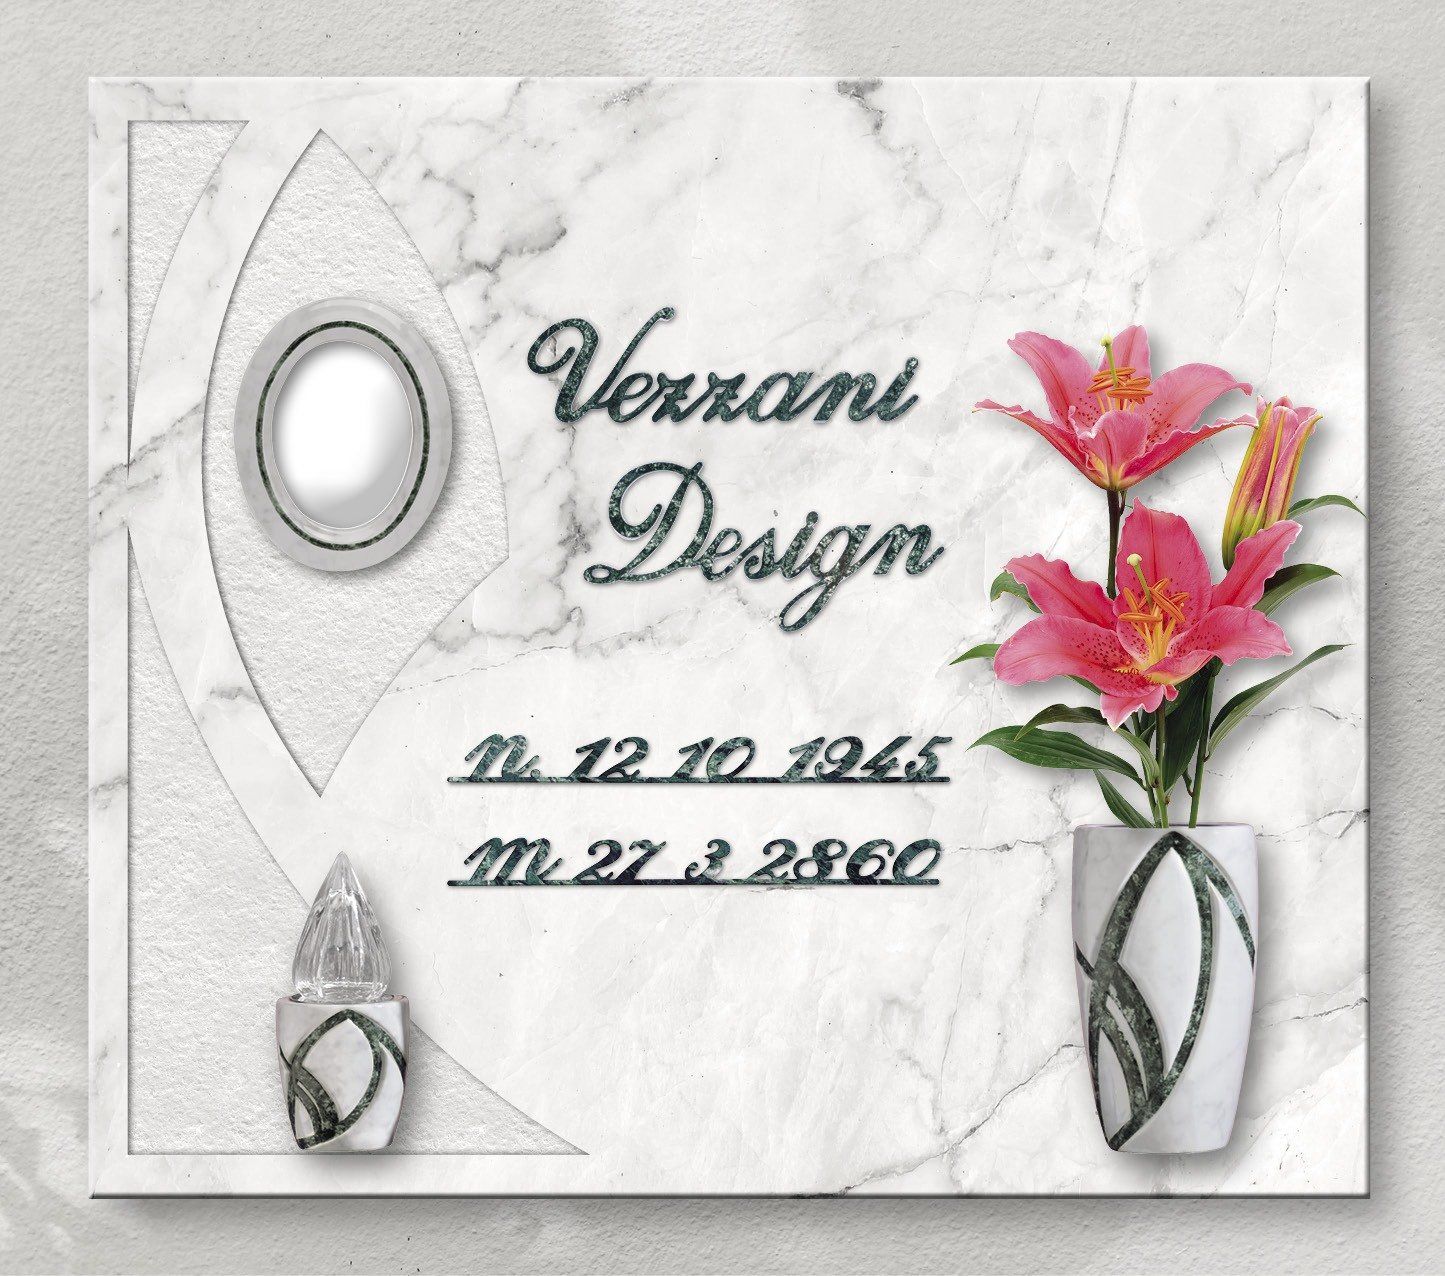 Niche with personalized engraving vezzani design 28